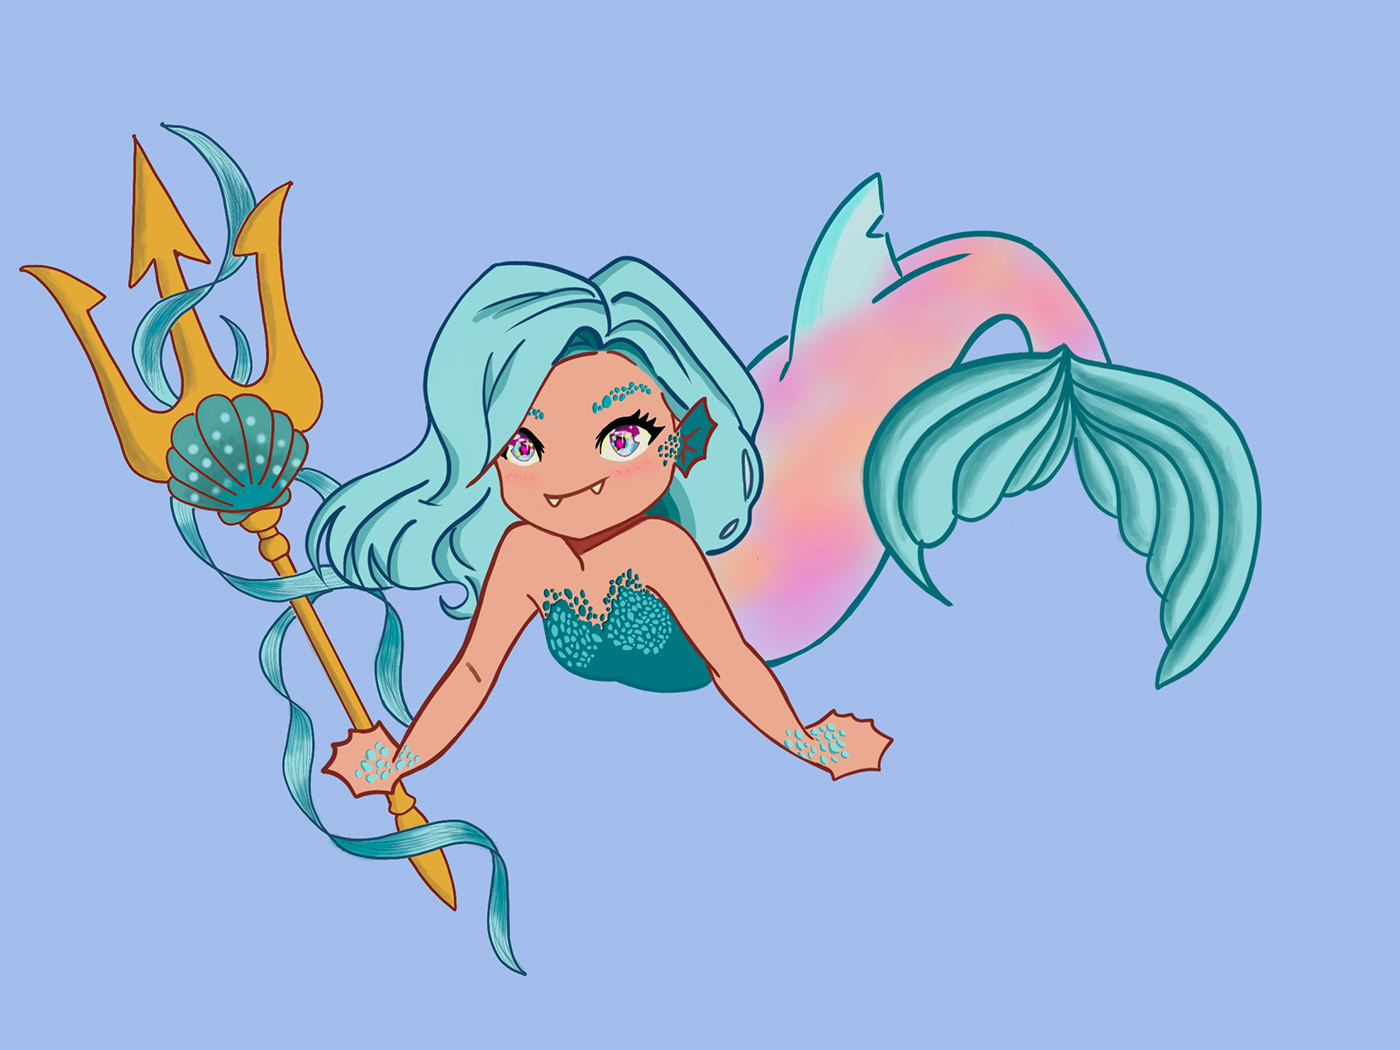 mermaid cartoon art coloring adobe draw cute colorful girl tail fantasy Mobile Legends